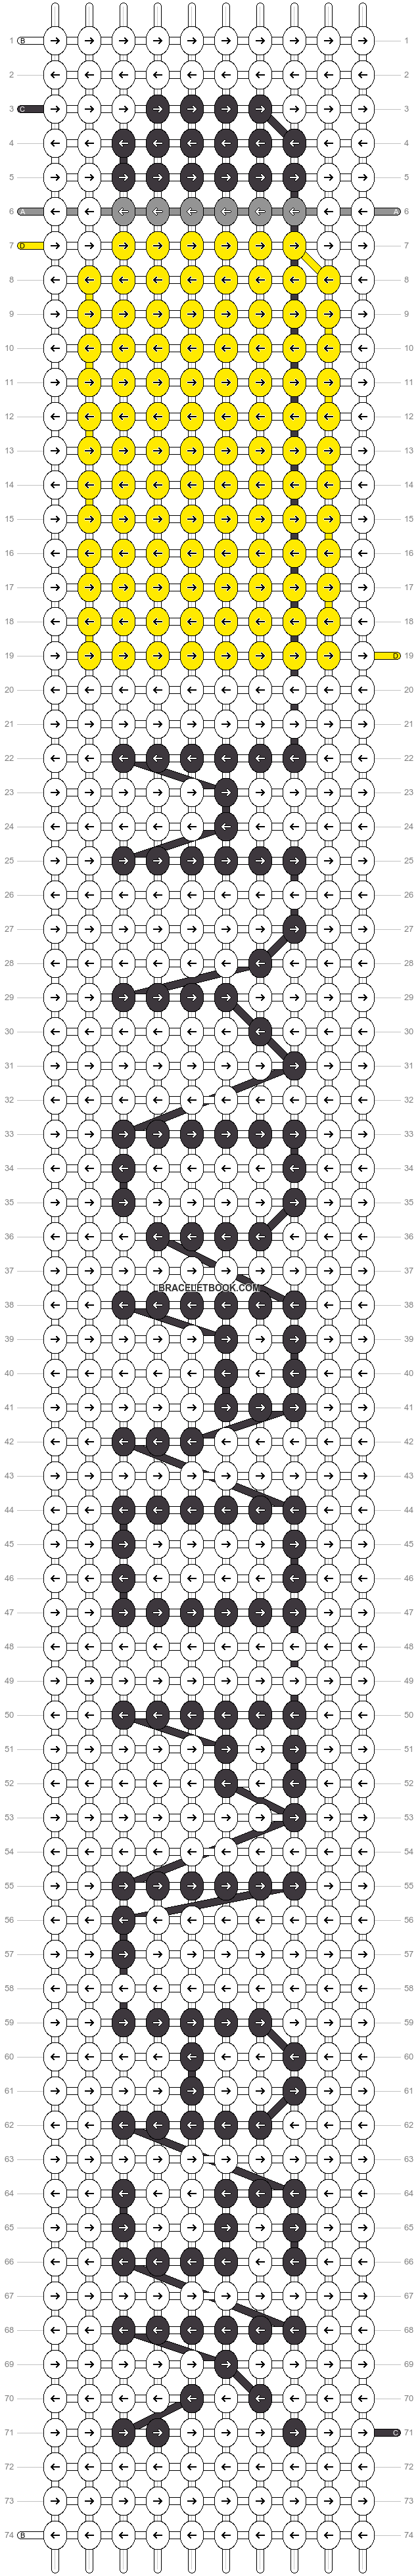 Alpha pattern #27828 variation #14902 pattern